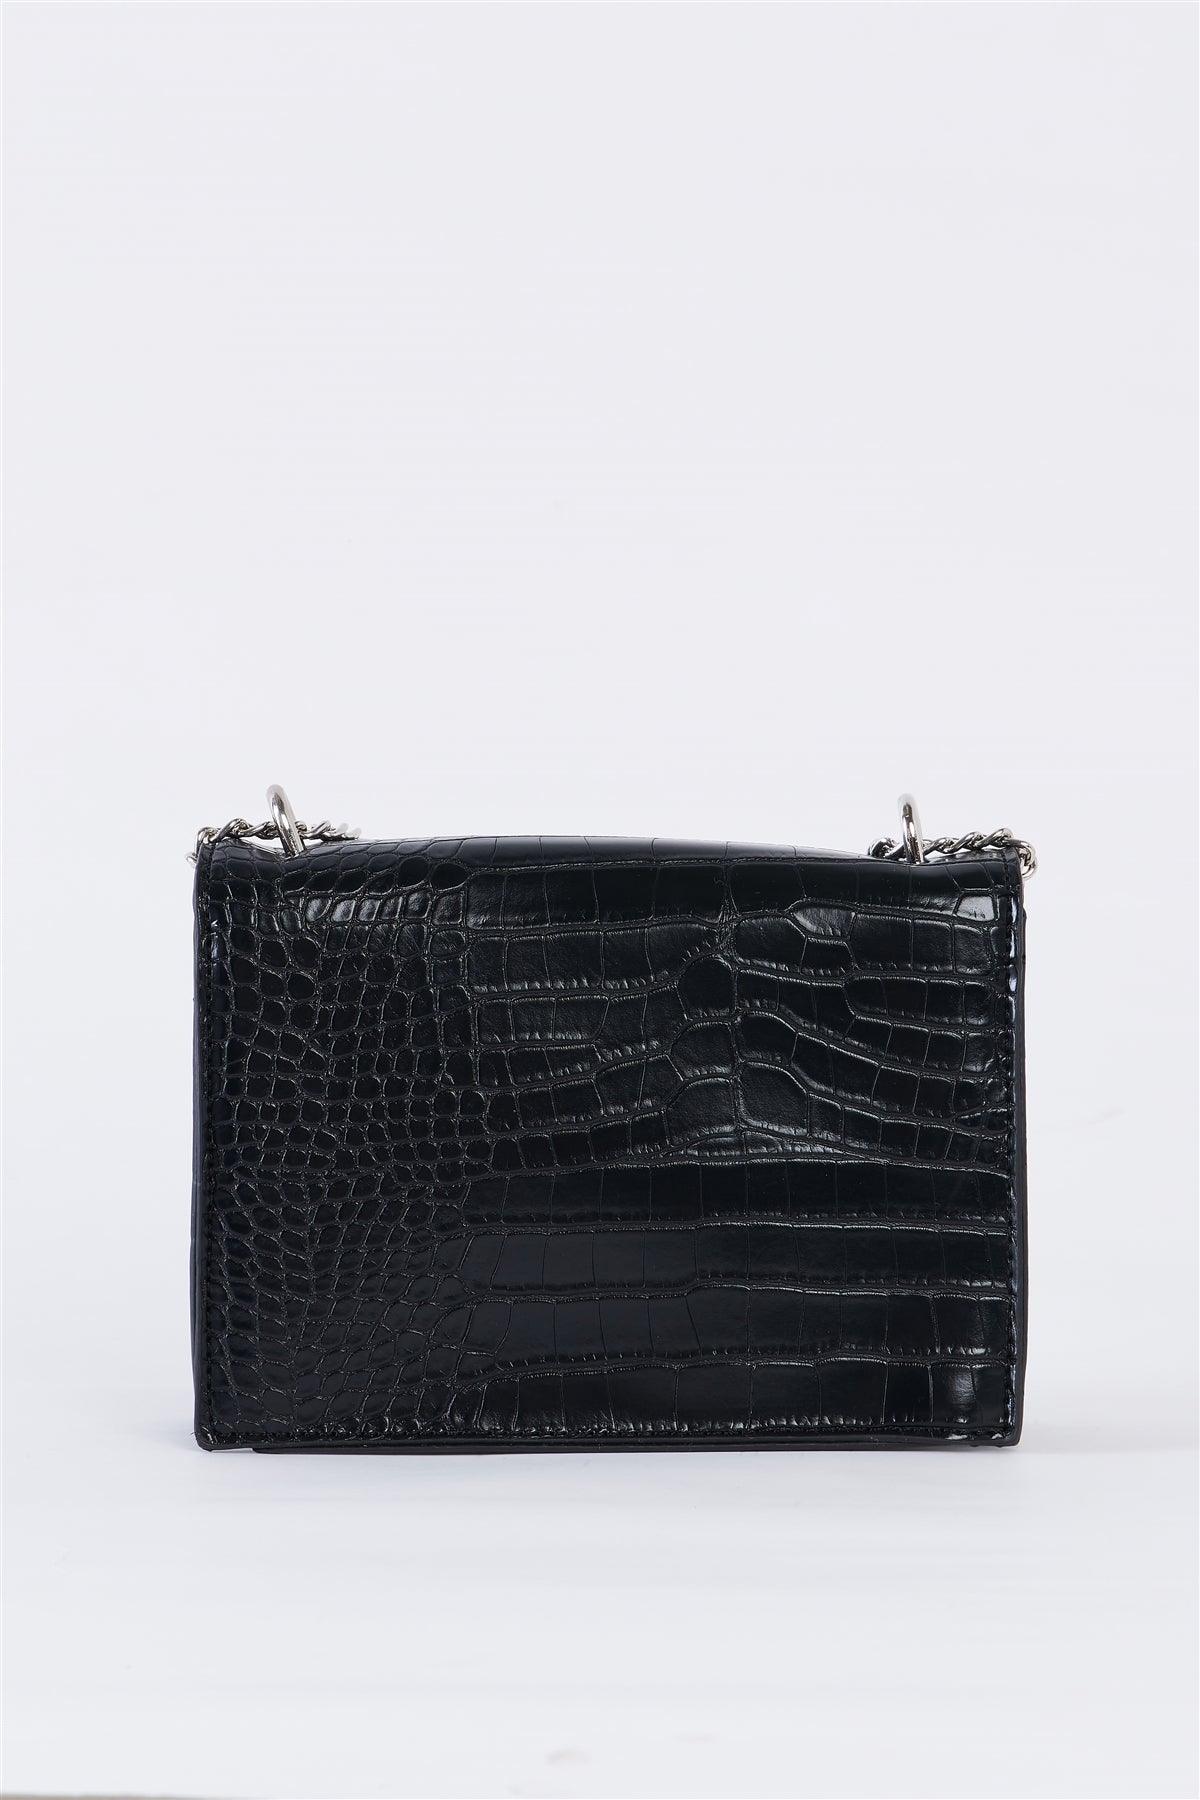 Black Croc Vegan Leather Glamorous Crossbody Chain Bag /3 Bags